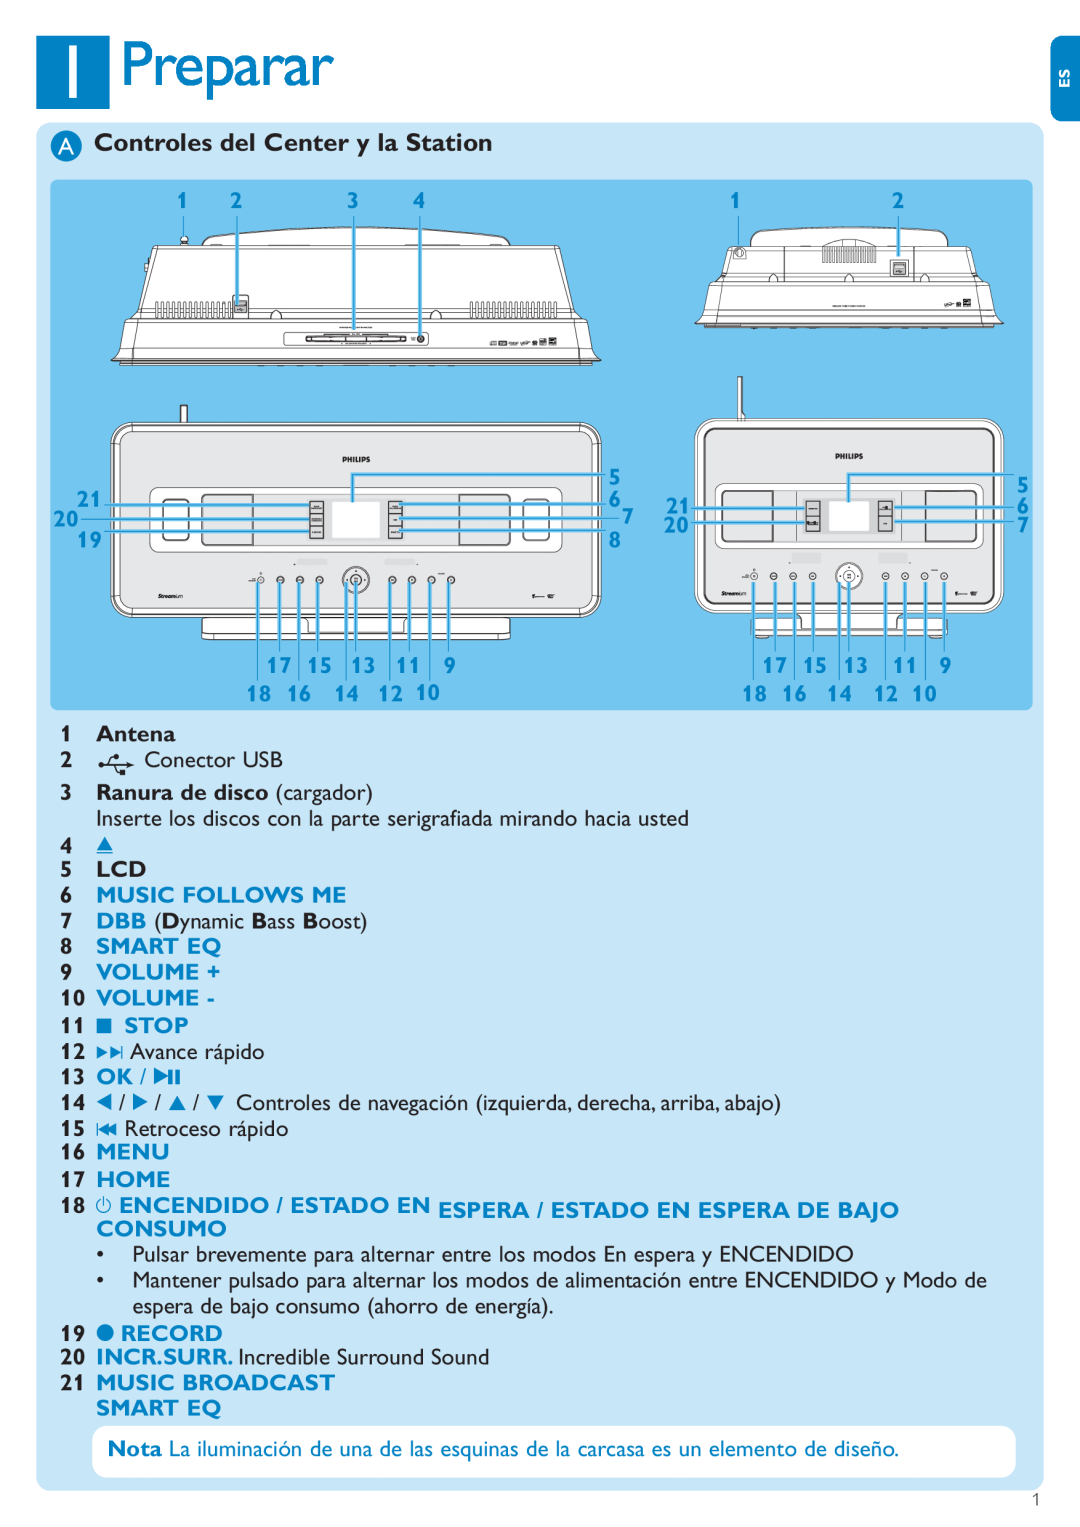 Philips WACS7500 manual 1Preparar, AControles del Center y la Station, 1Antena, 3Ranura de disco cargador, 5LCD 